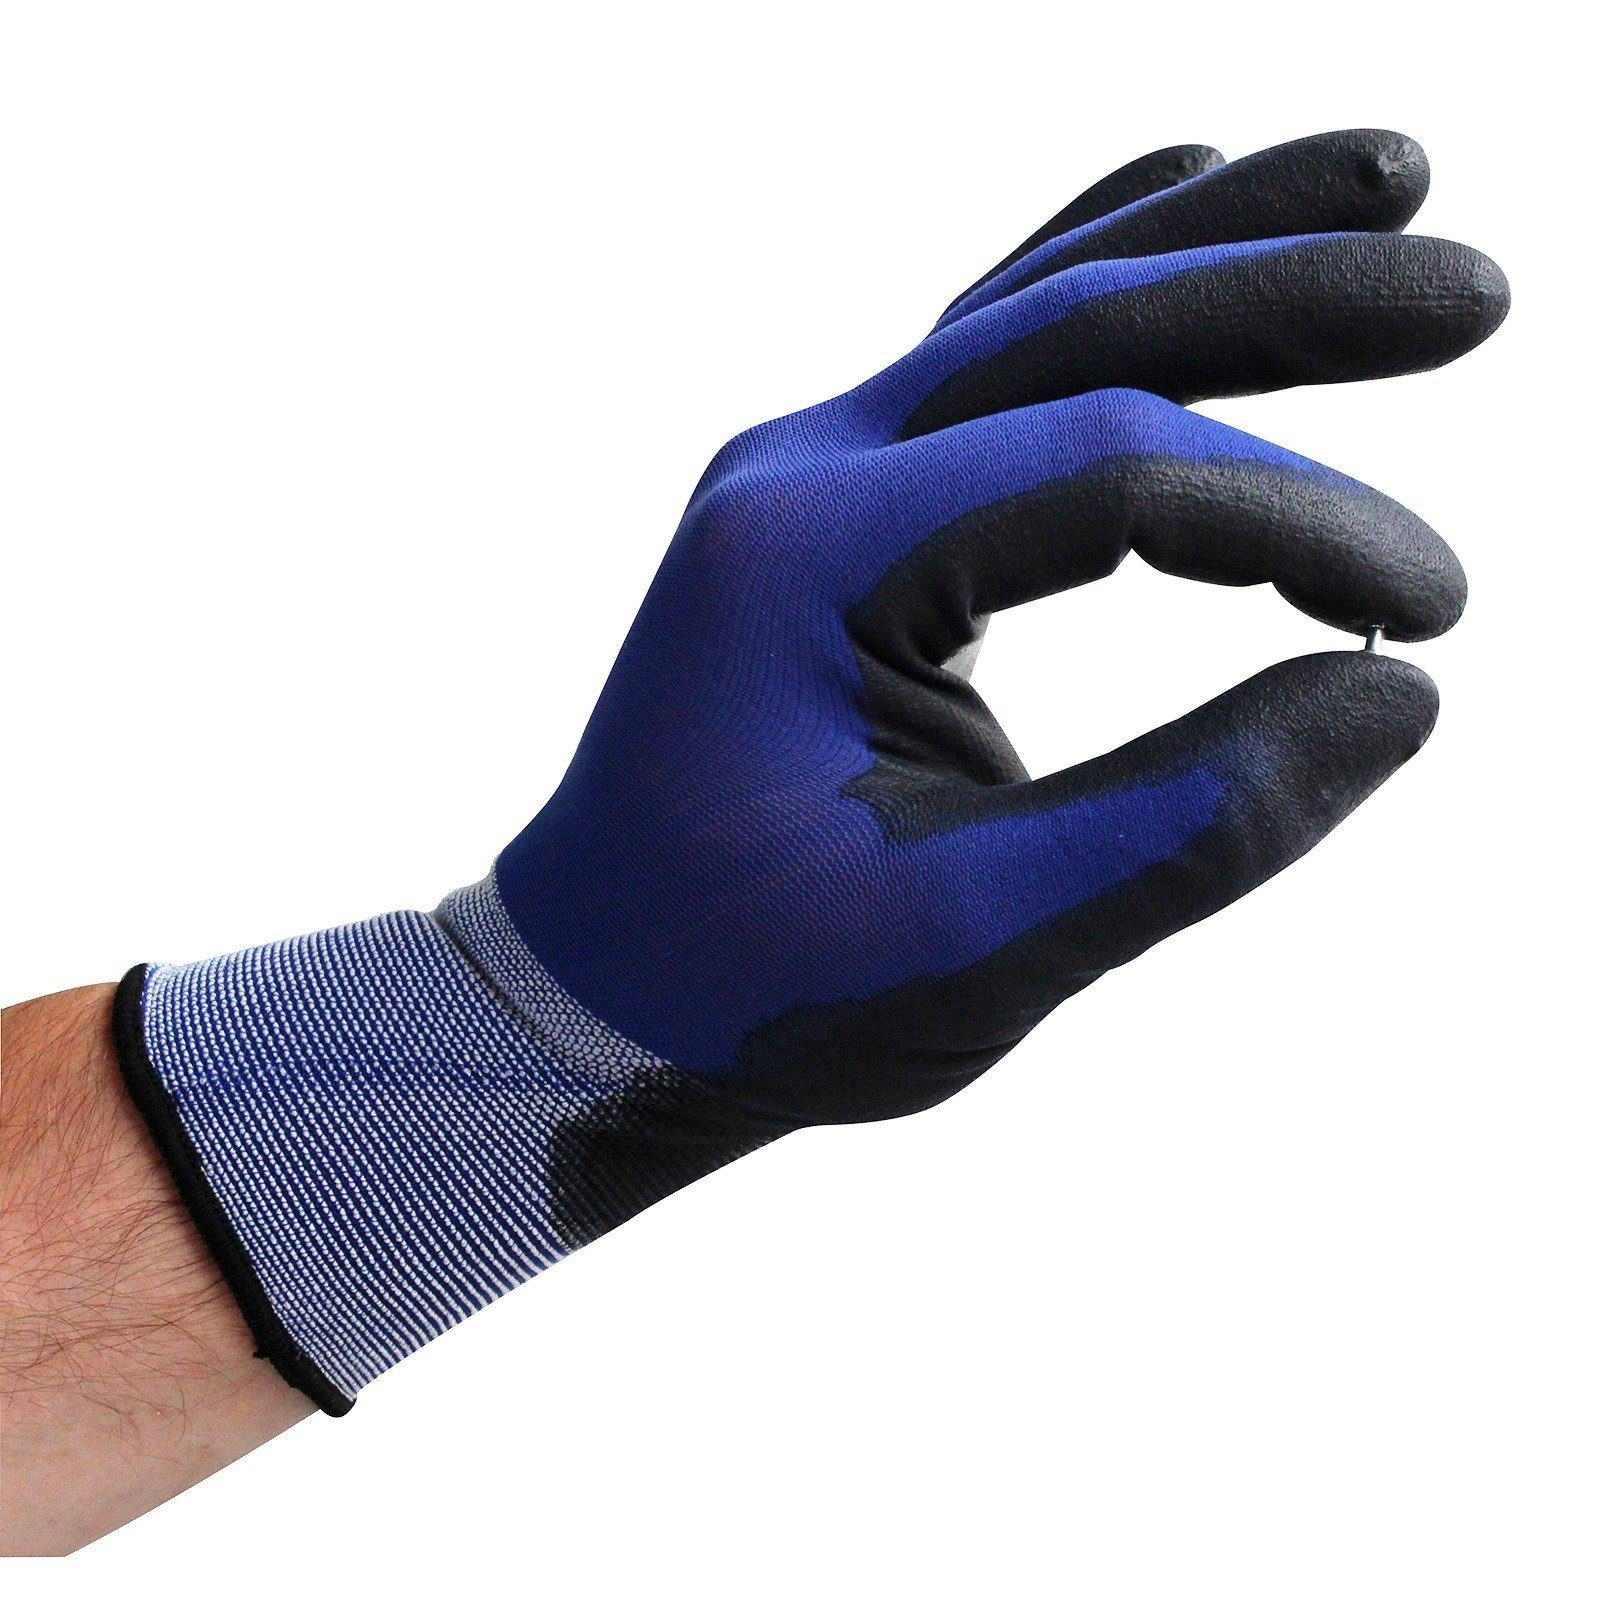 Skin Nitril-Handschuhe NITRAS PU-Beschichtung (Spar-Set) - Paar blau Nitras 120 6240 Nylon-Strickhandschuhe,